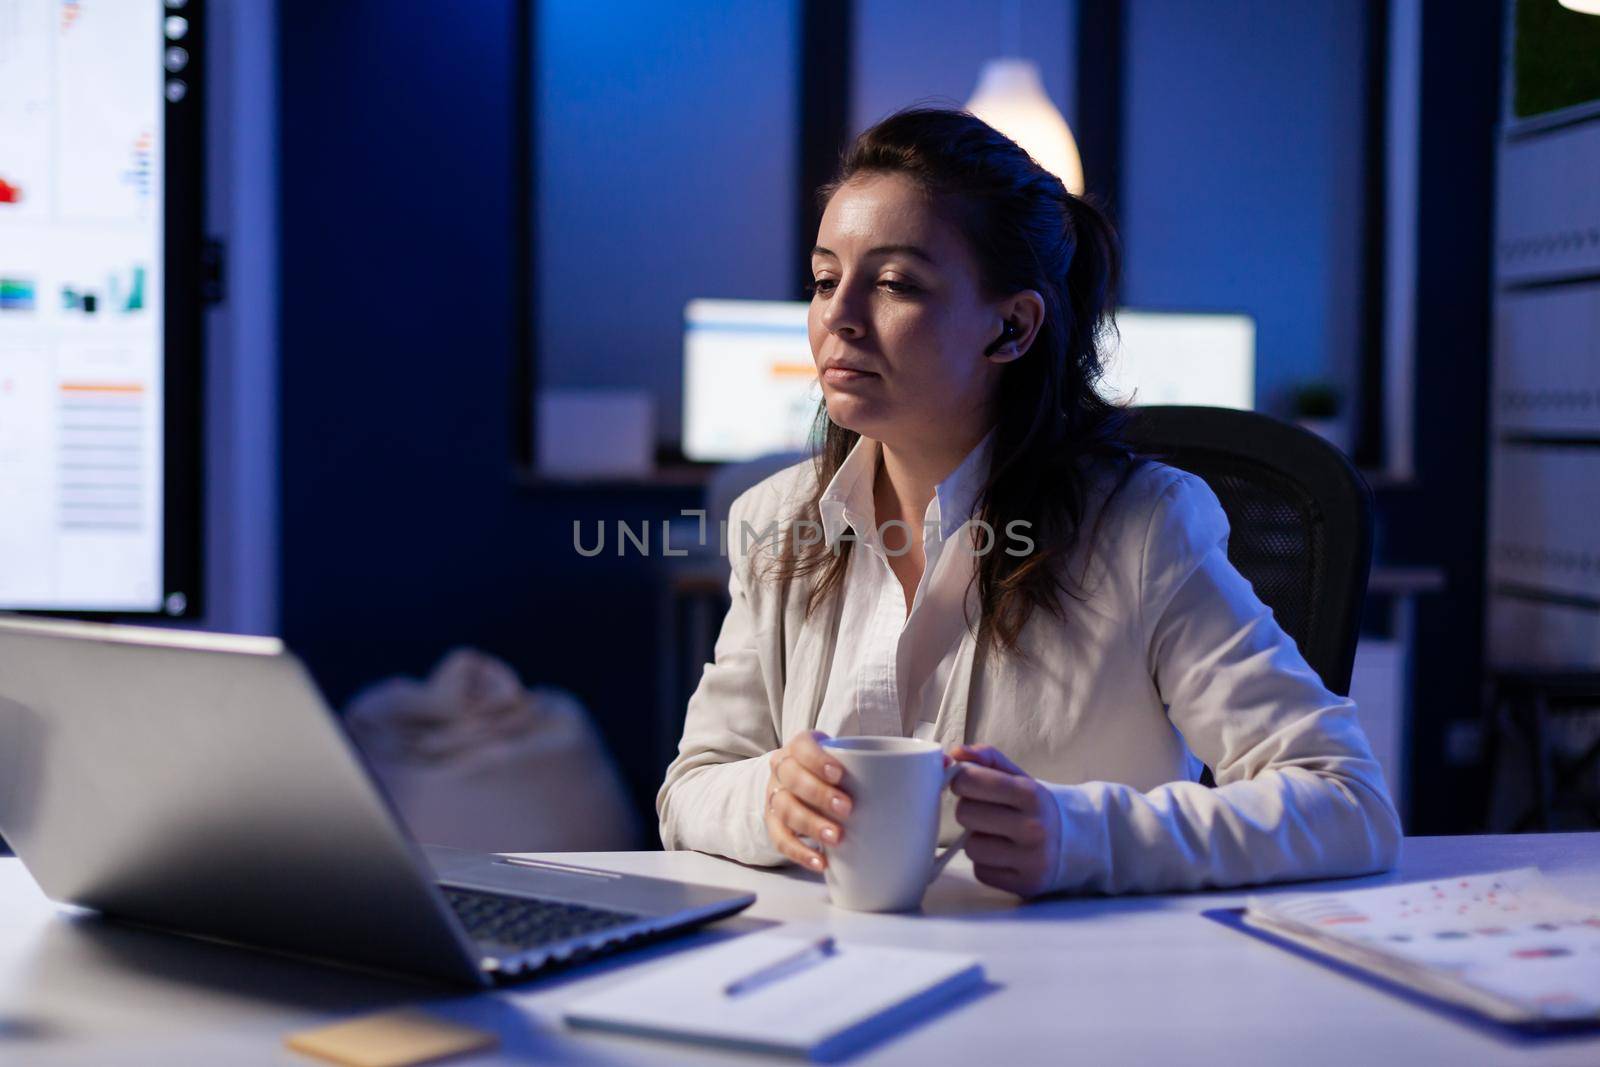 Workaholic businesswoman analysing economic statistics late at night by DCStudio